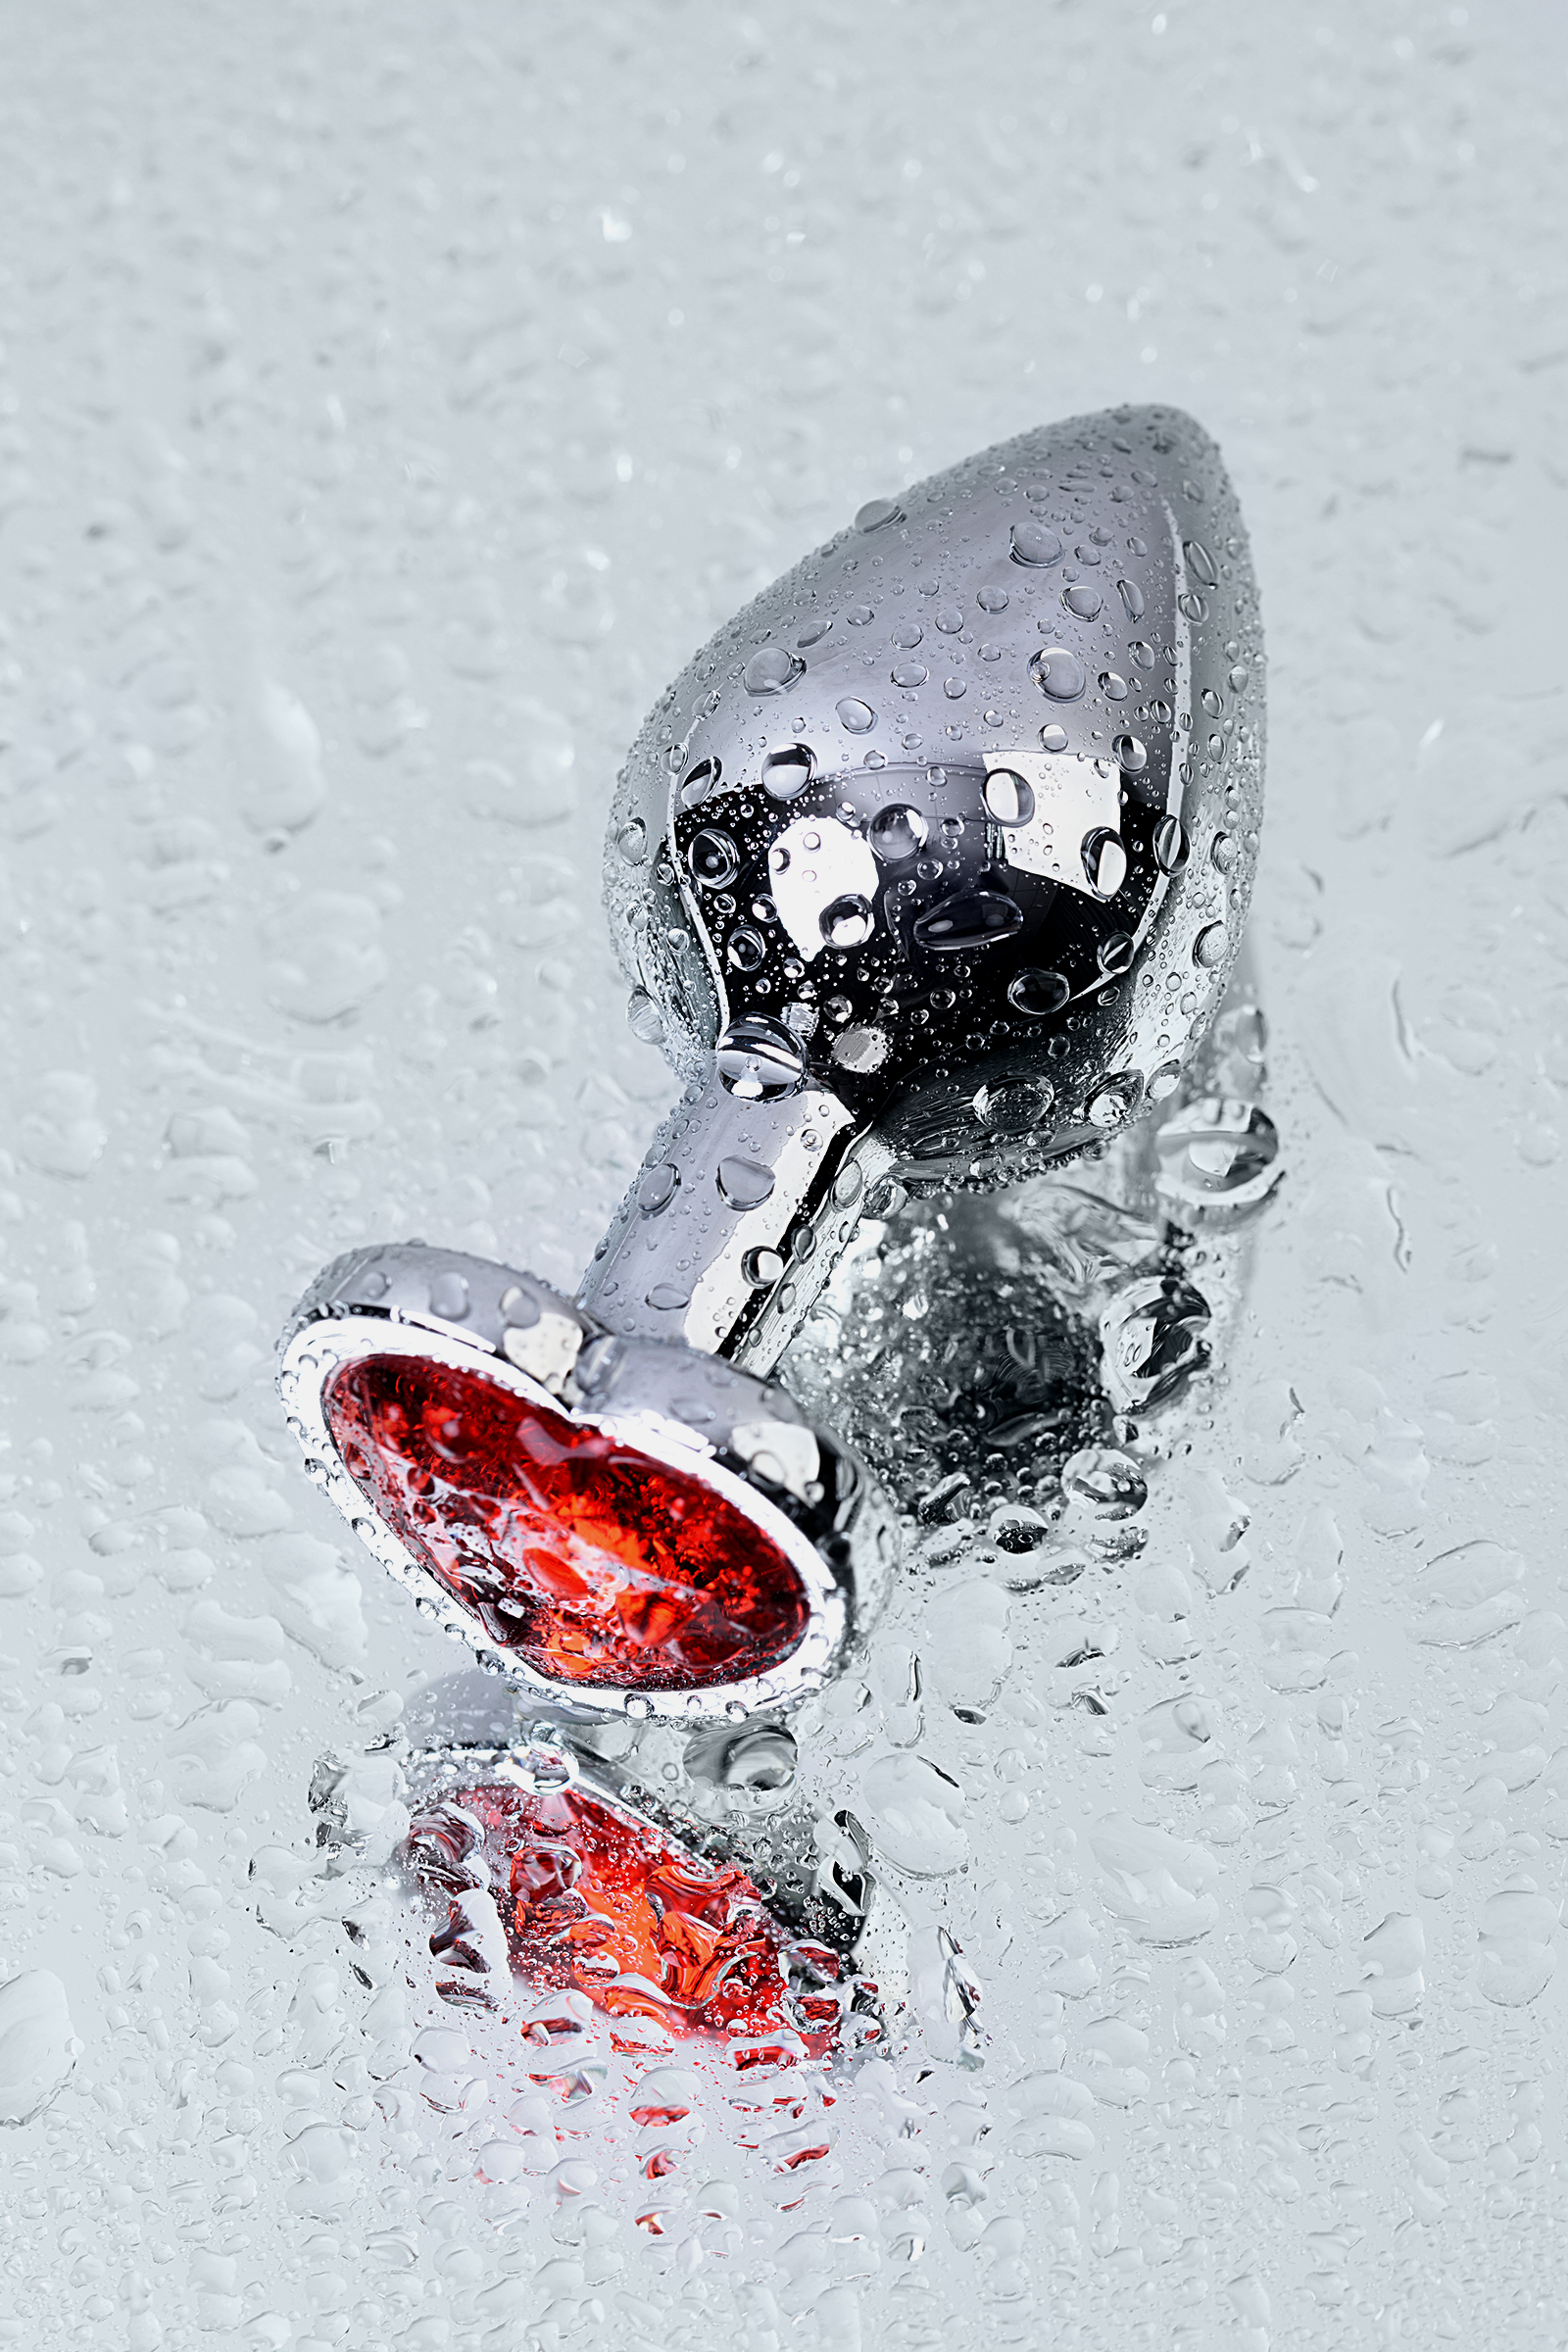 Анальная пробка Metal by Toyfa S с кристаллом-сердце цвета рубин, серебристая